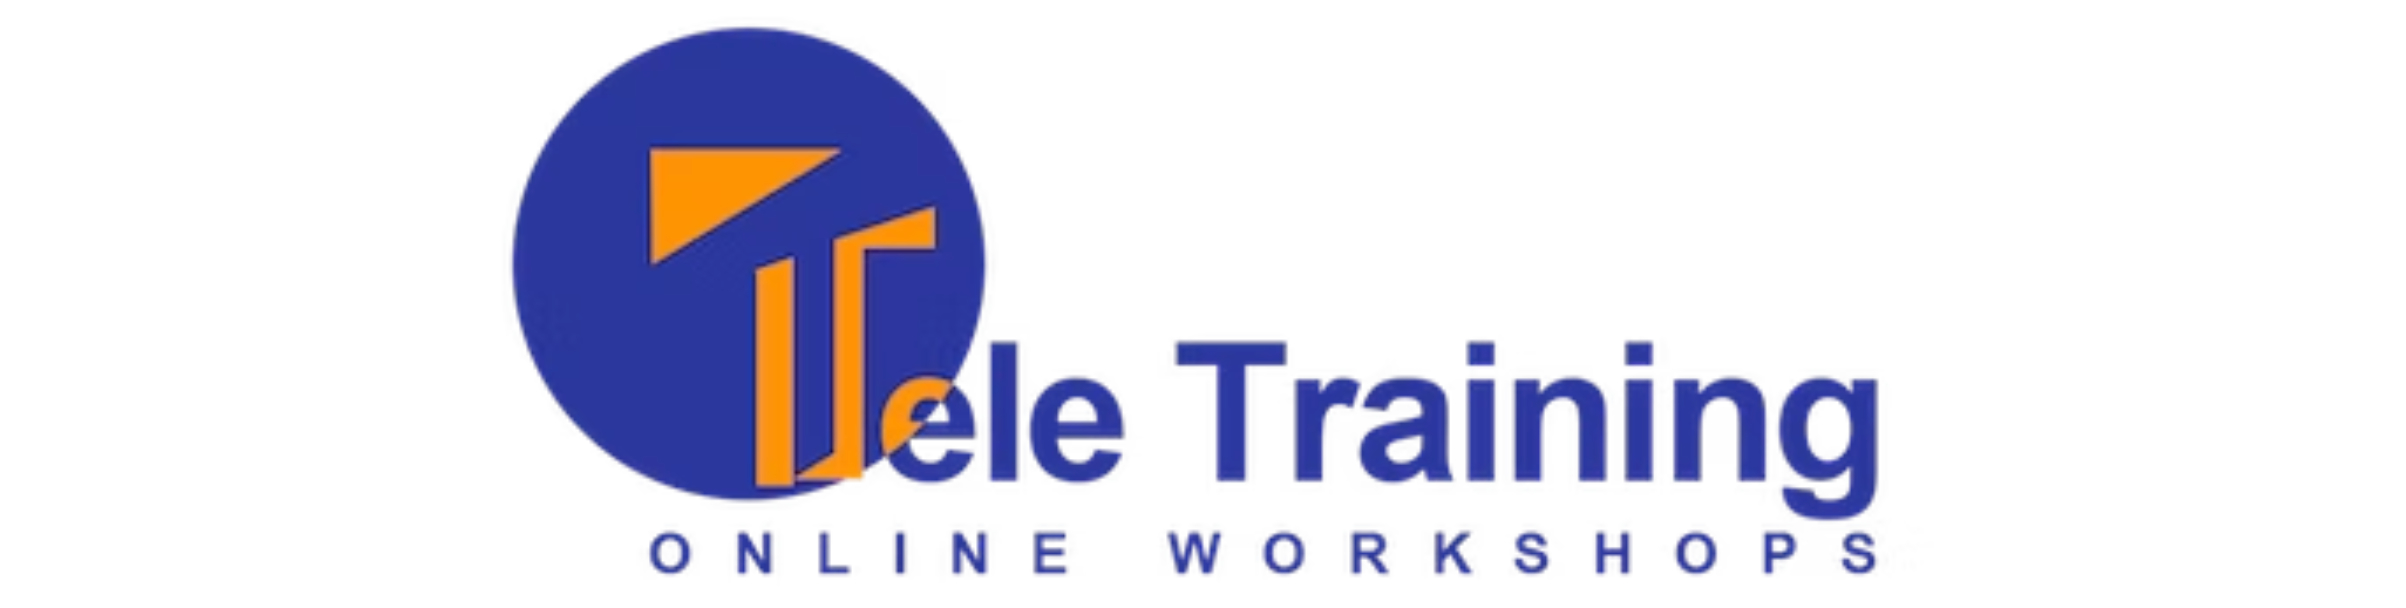 Nagawa Corporate Training Ltd. logo